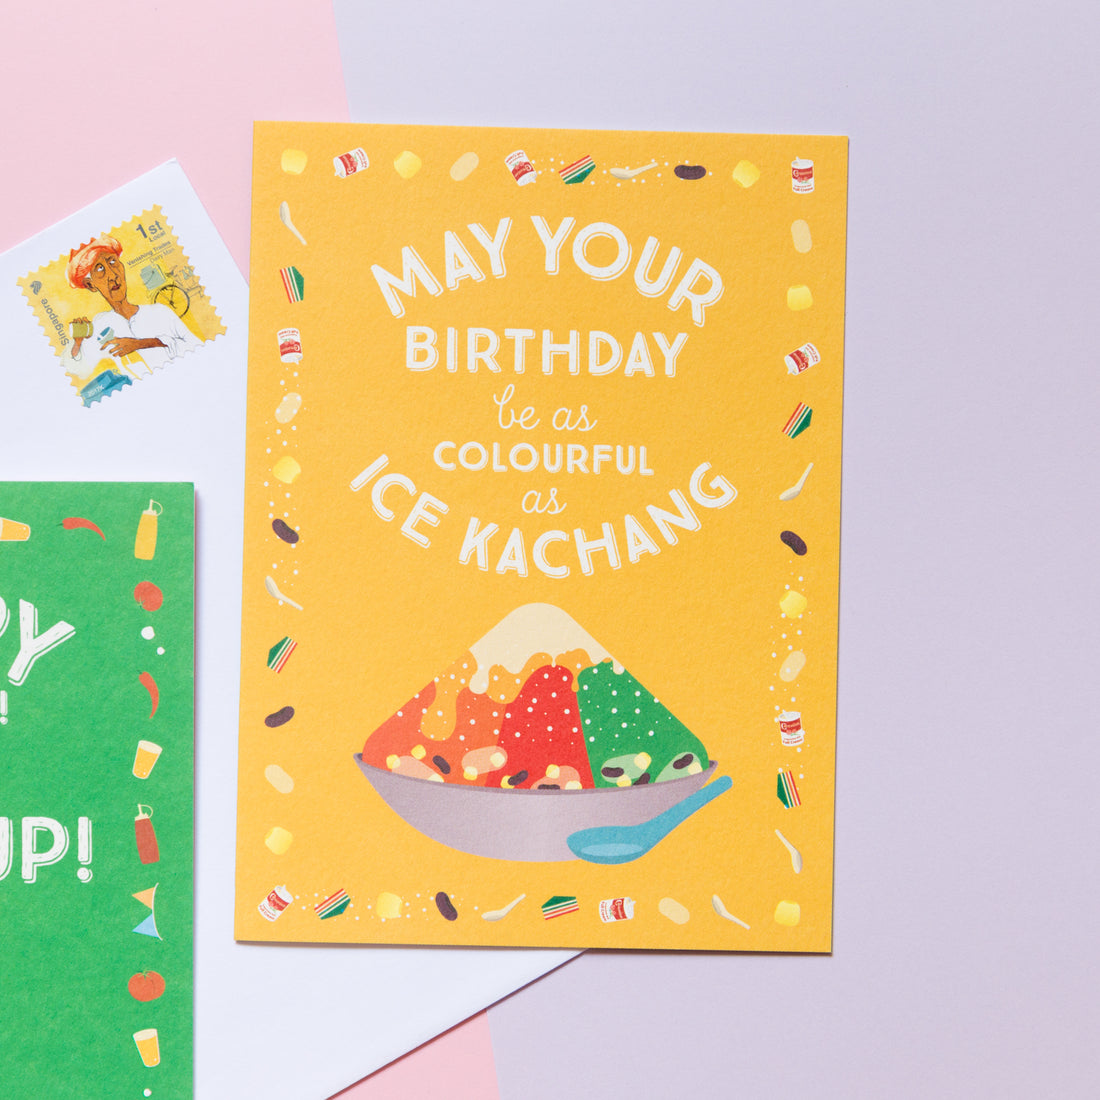 Colourful as Ice Kachang Birthday Card